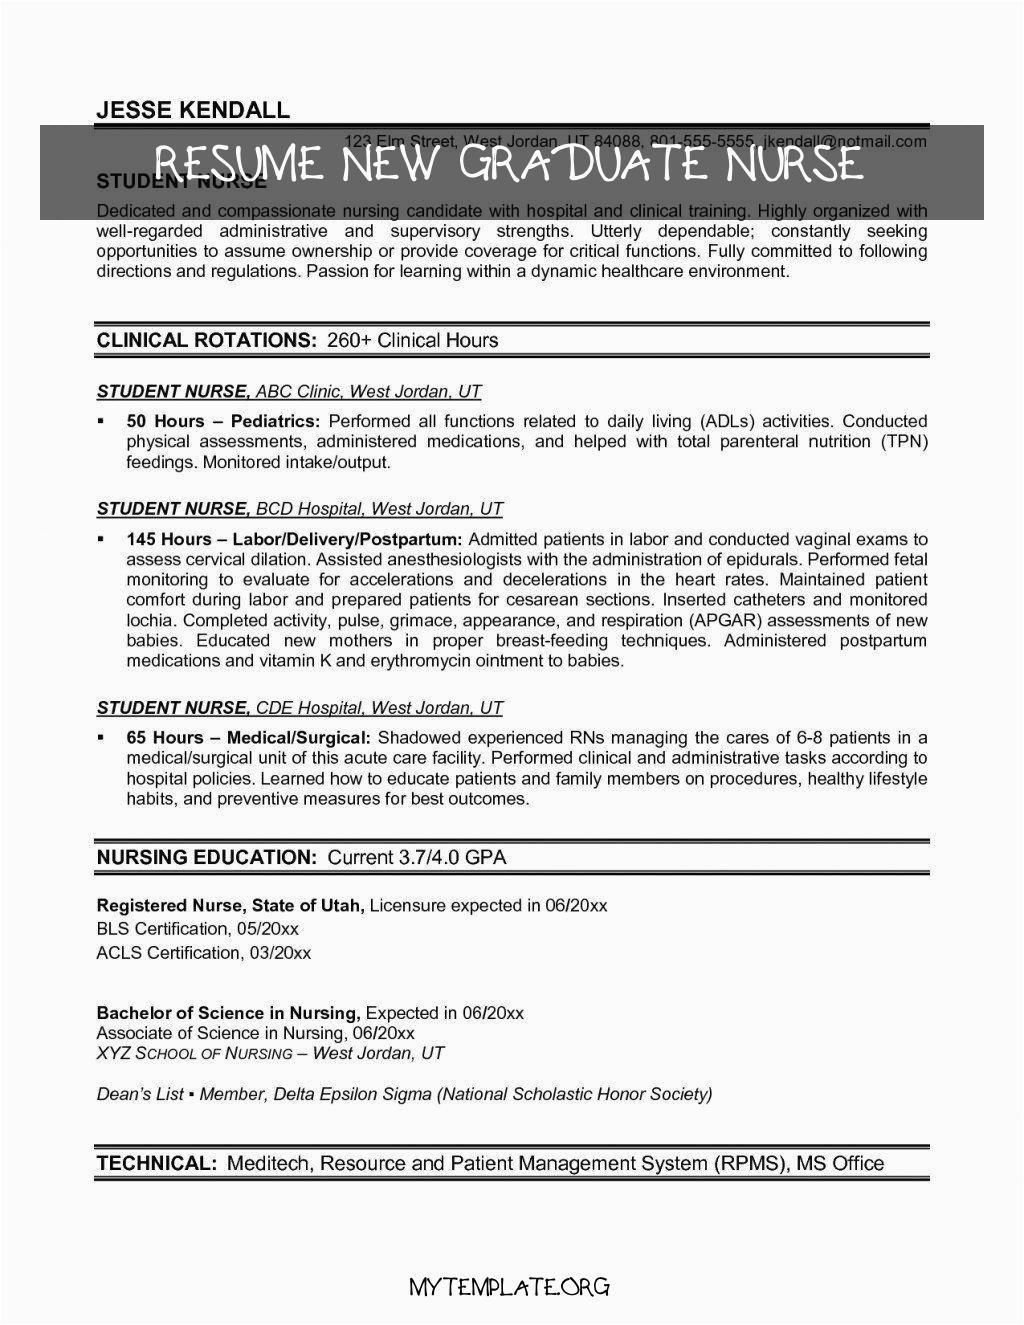 New Grad Registered Nurse Resume Sample Resume New Graduate Nurse New Grad Rn Resume Luxury